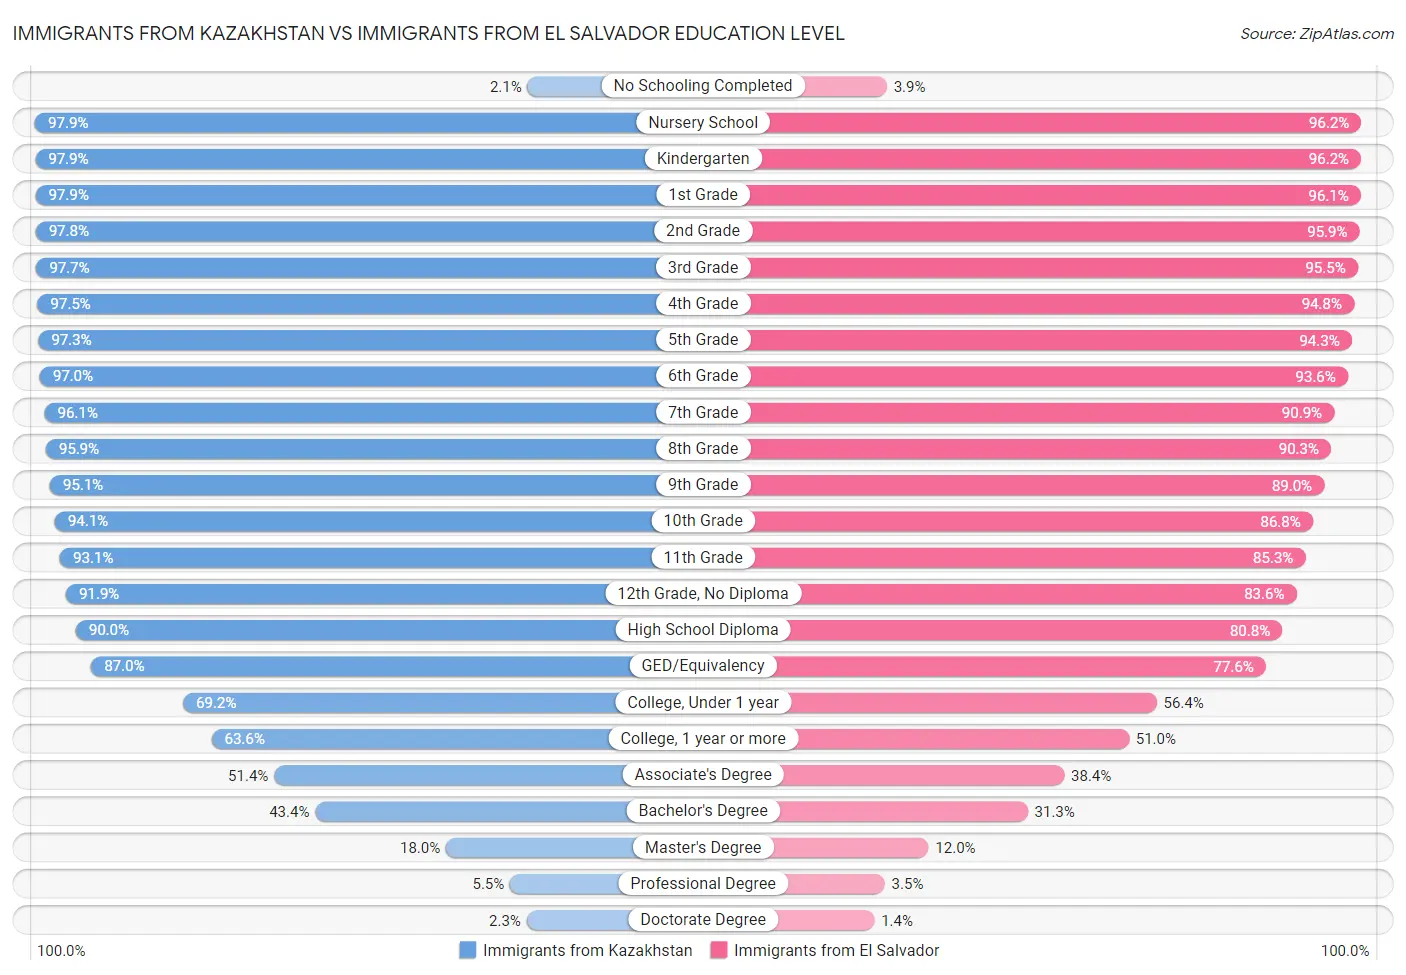 Immigrants from Kazakhstan vs Immigrants from El Salvador Education Level